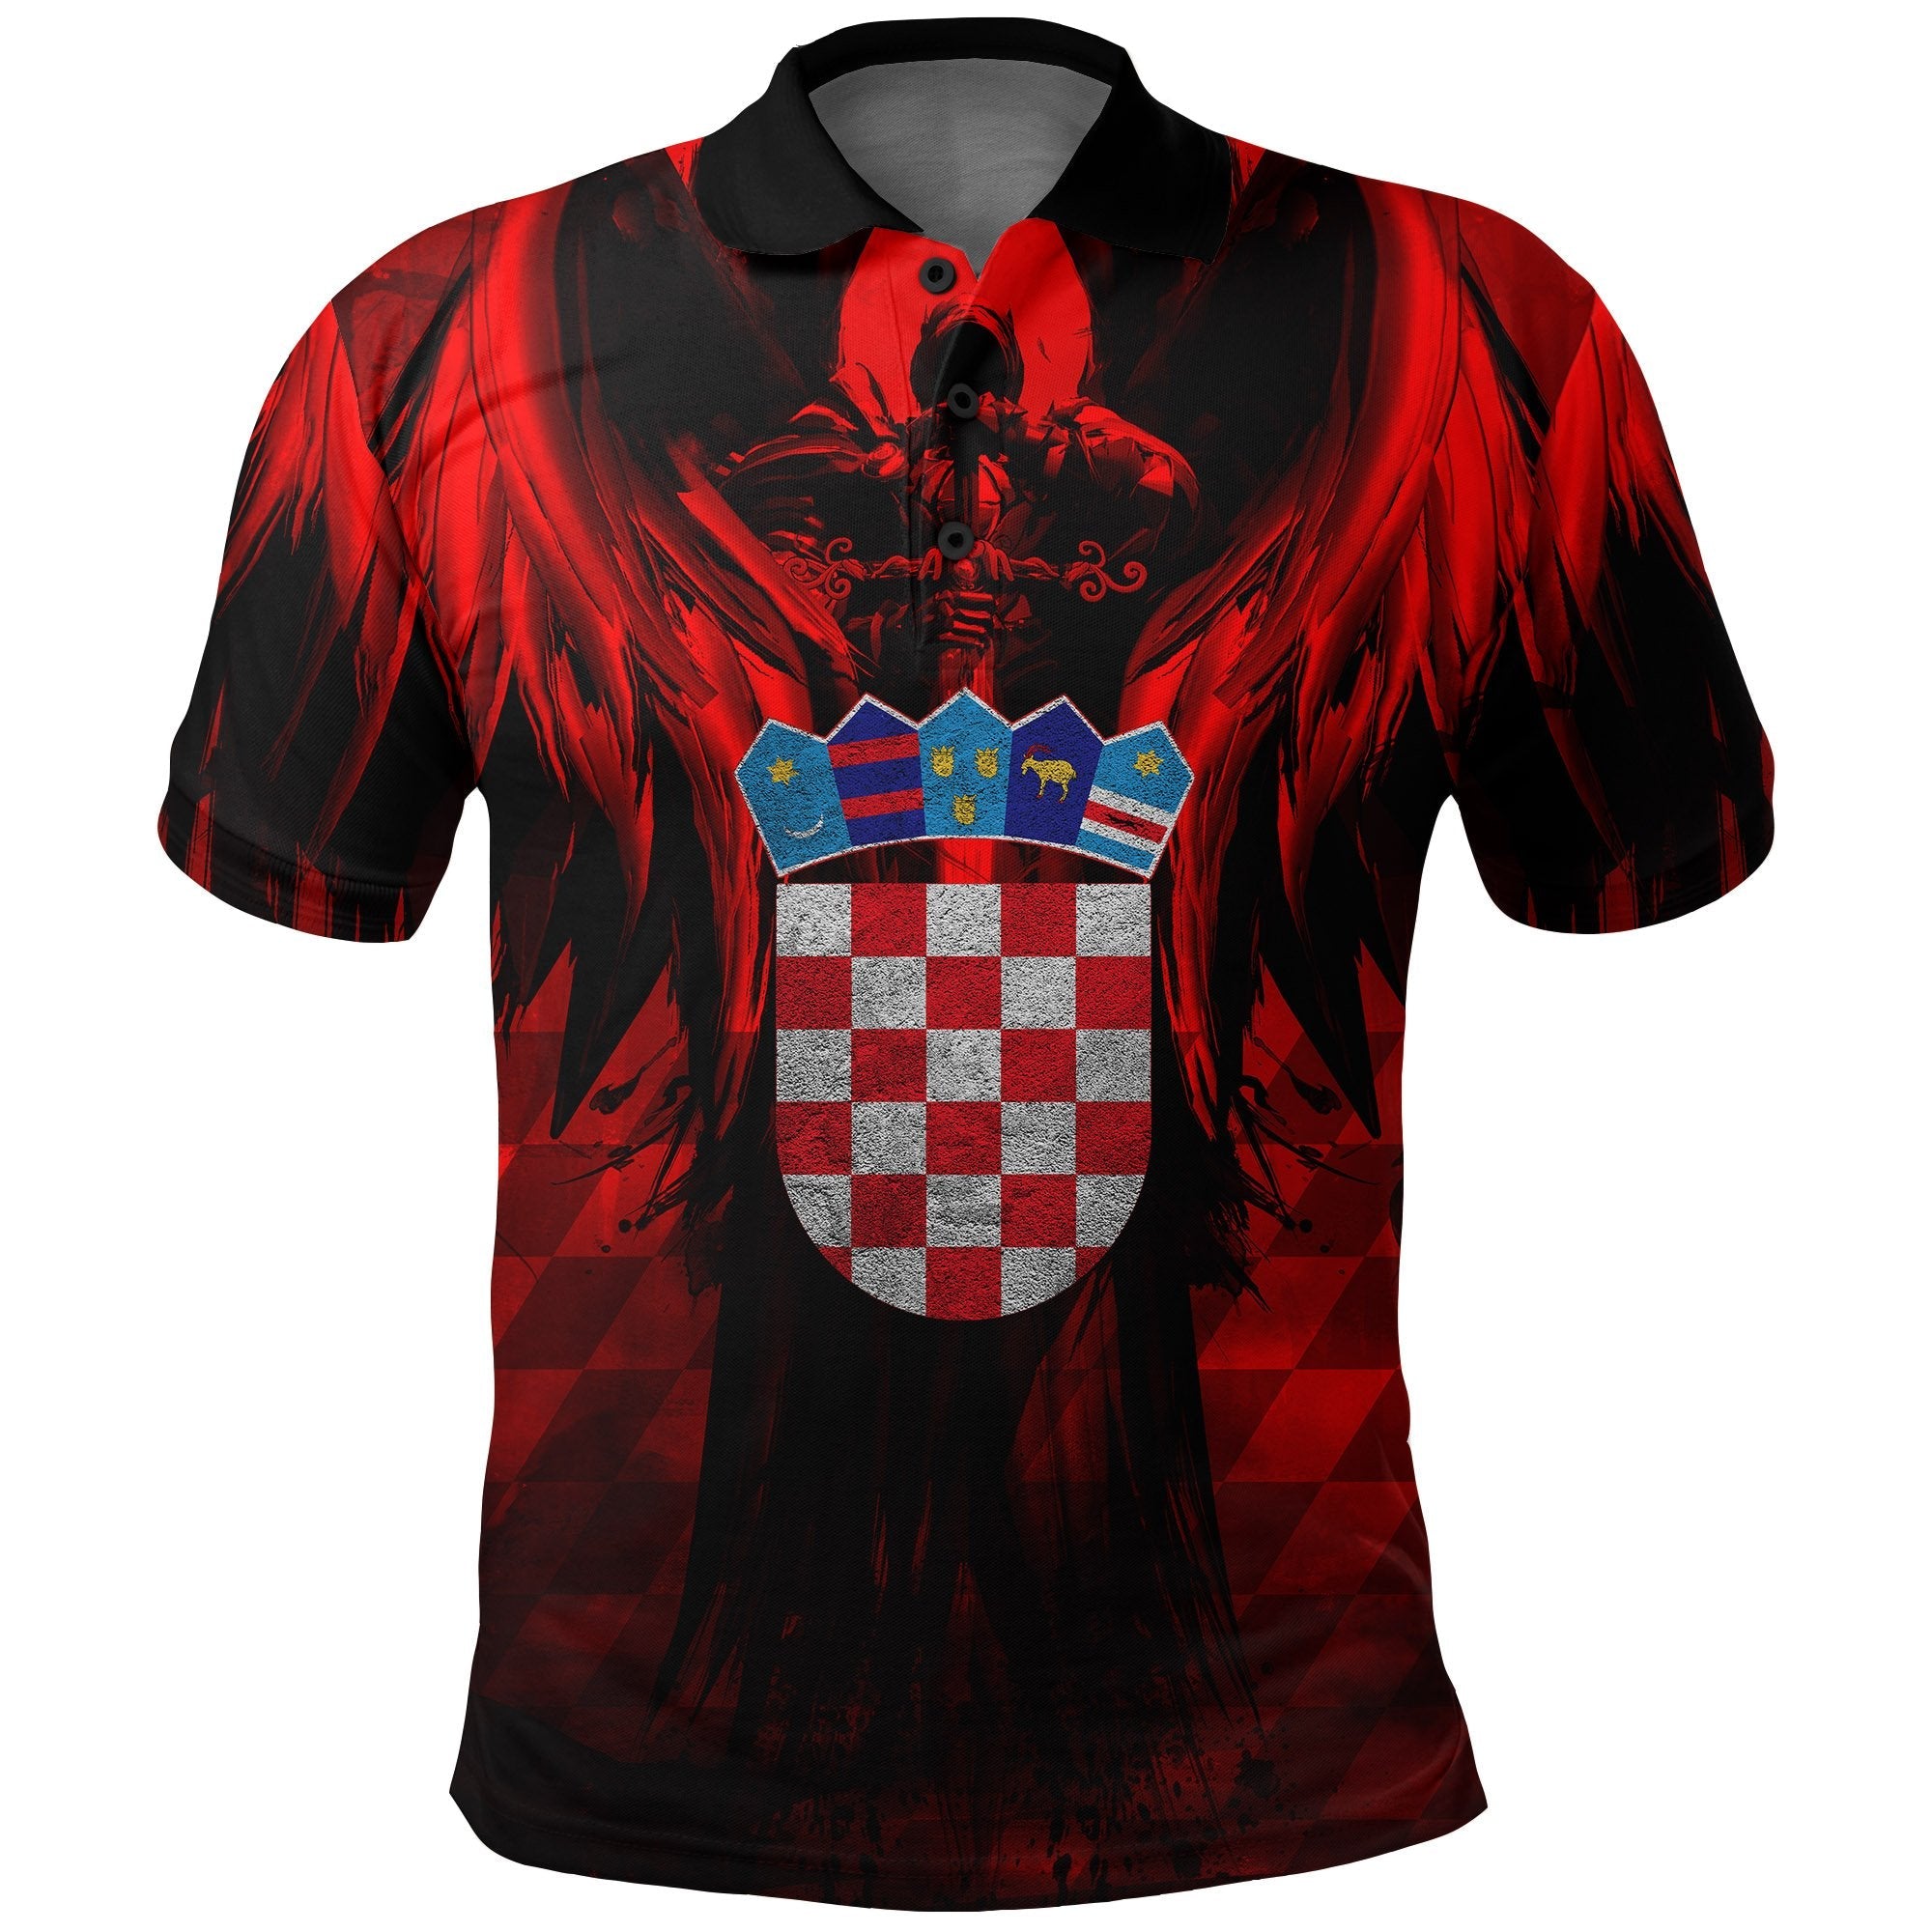 croatia-hrvatska-polo-shirt